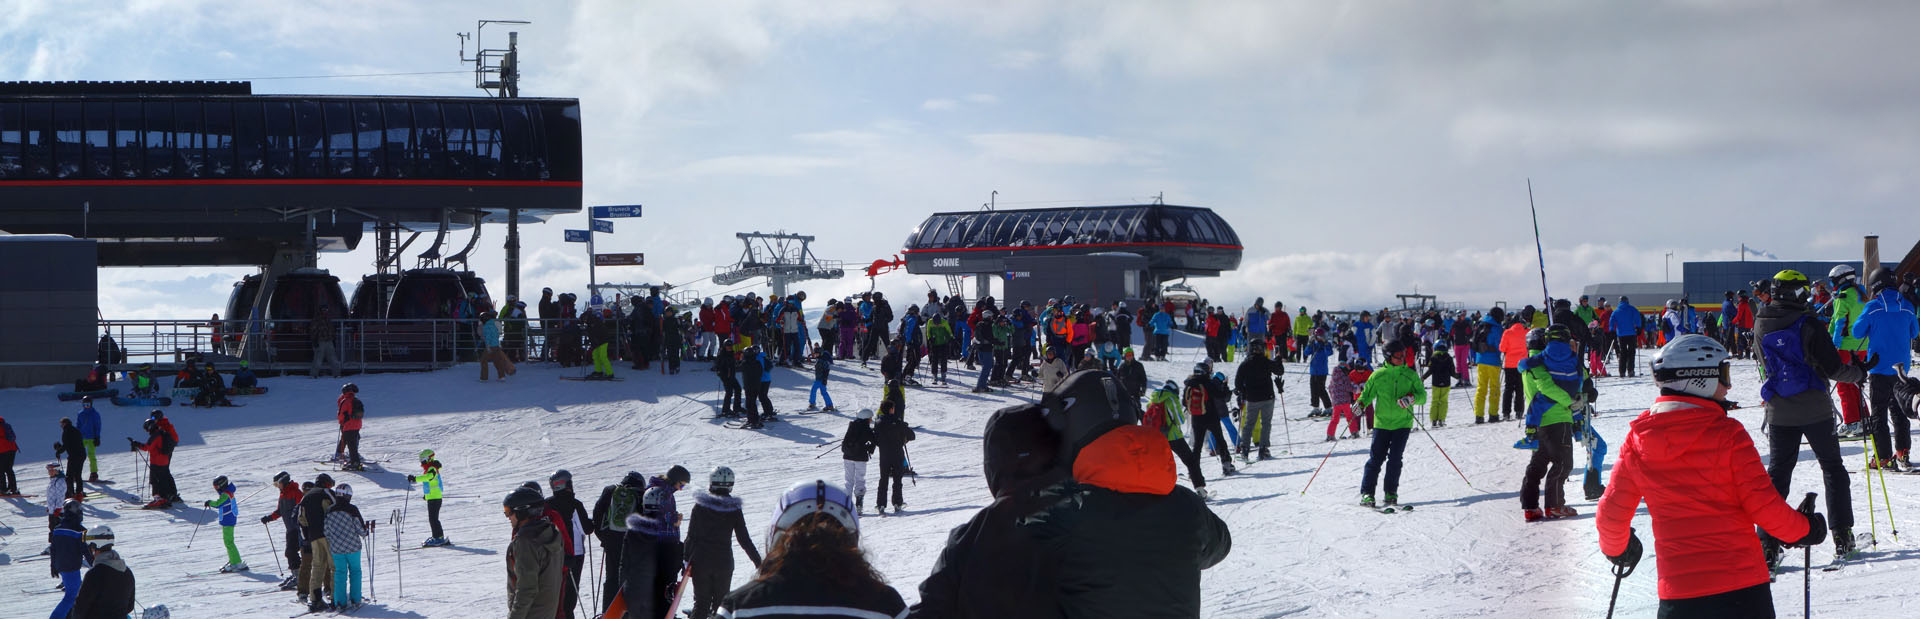 Überfülltes Skigebiet